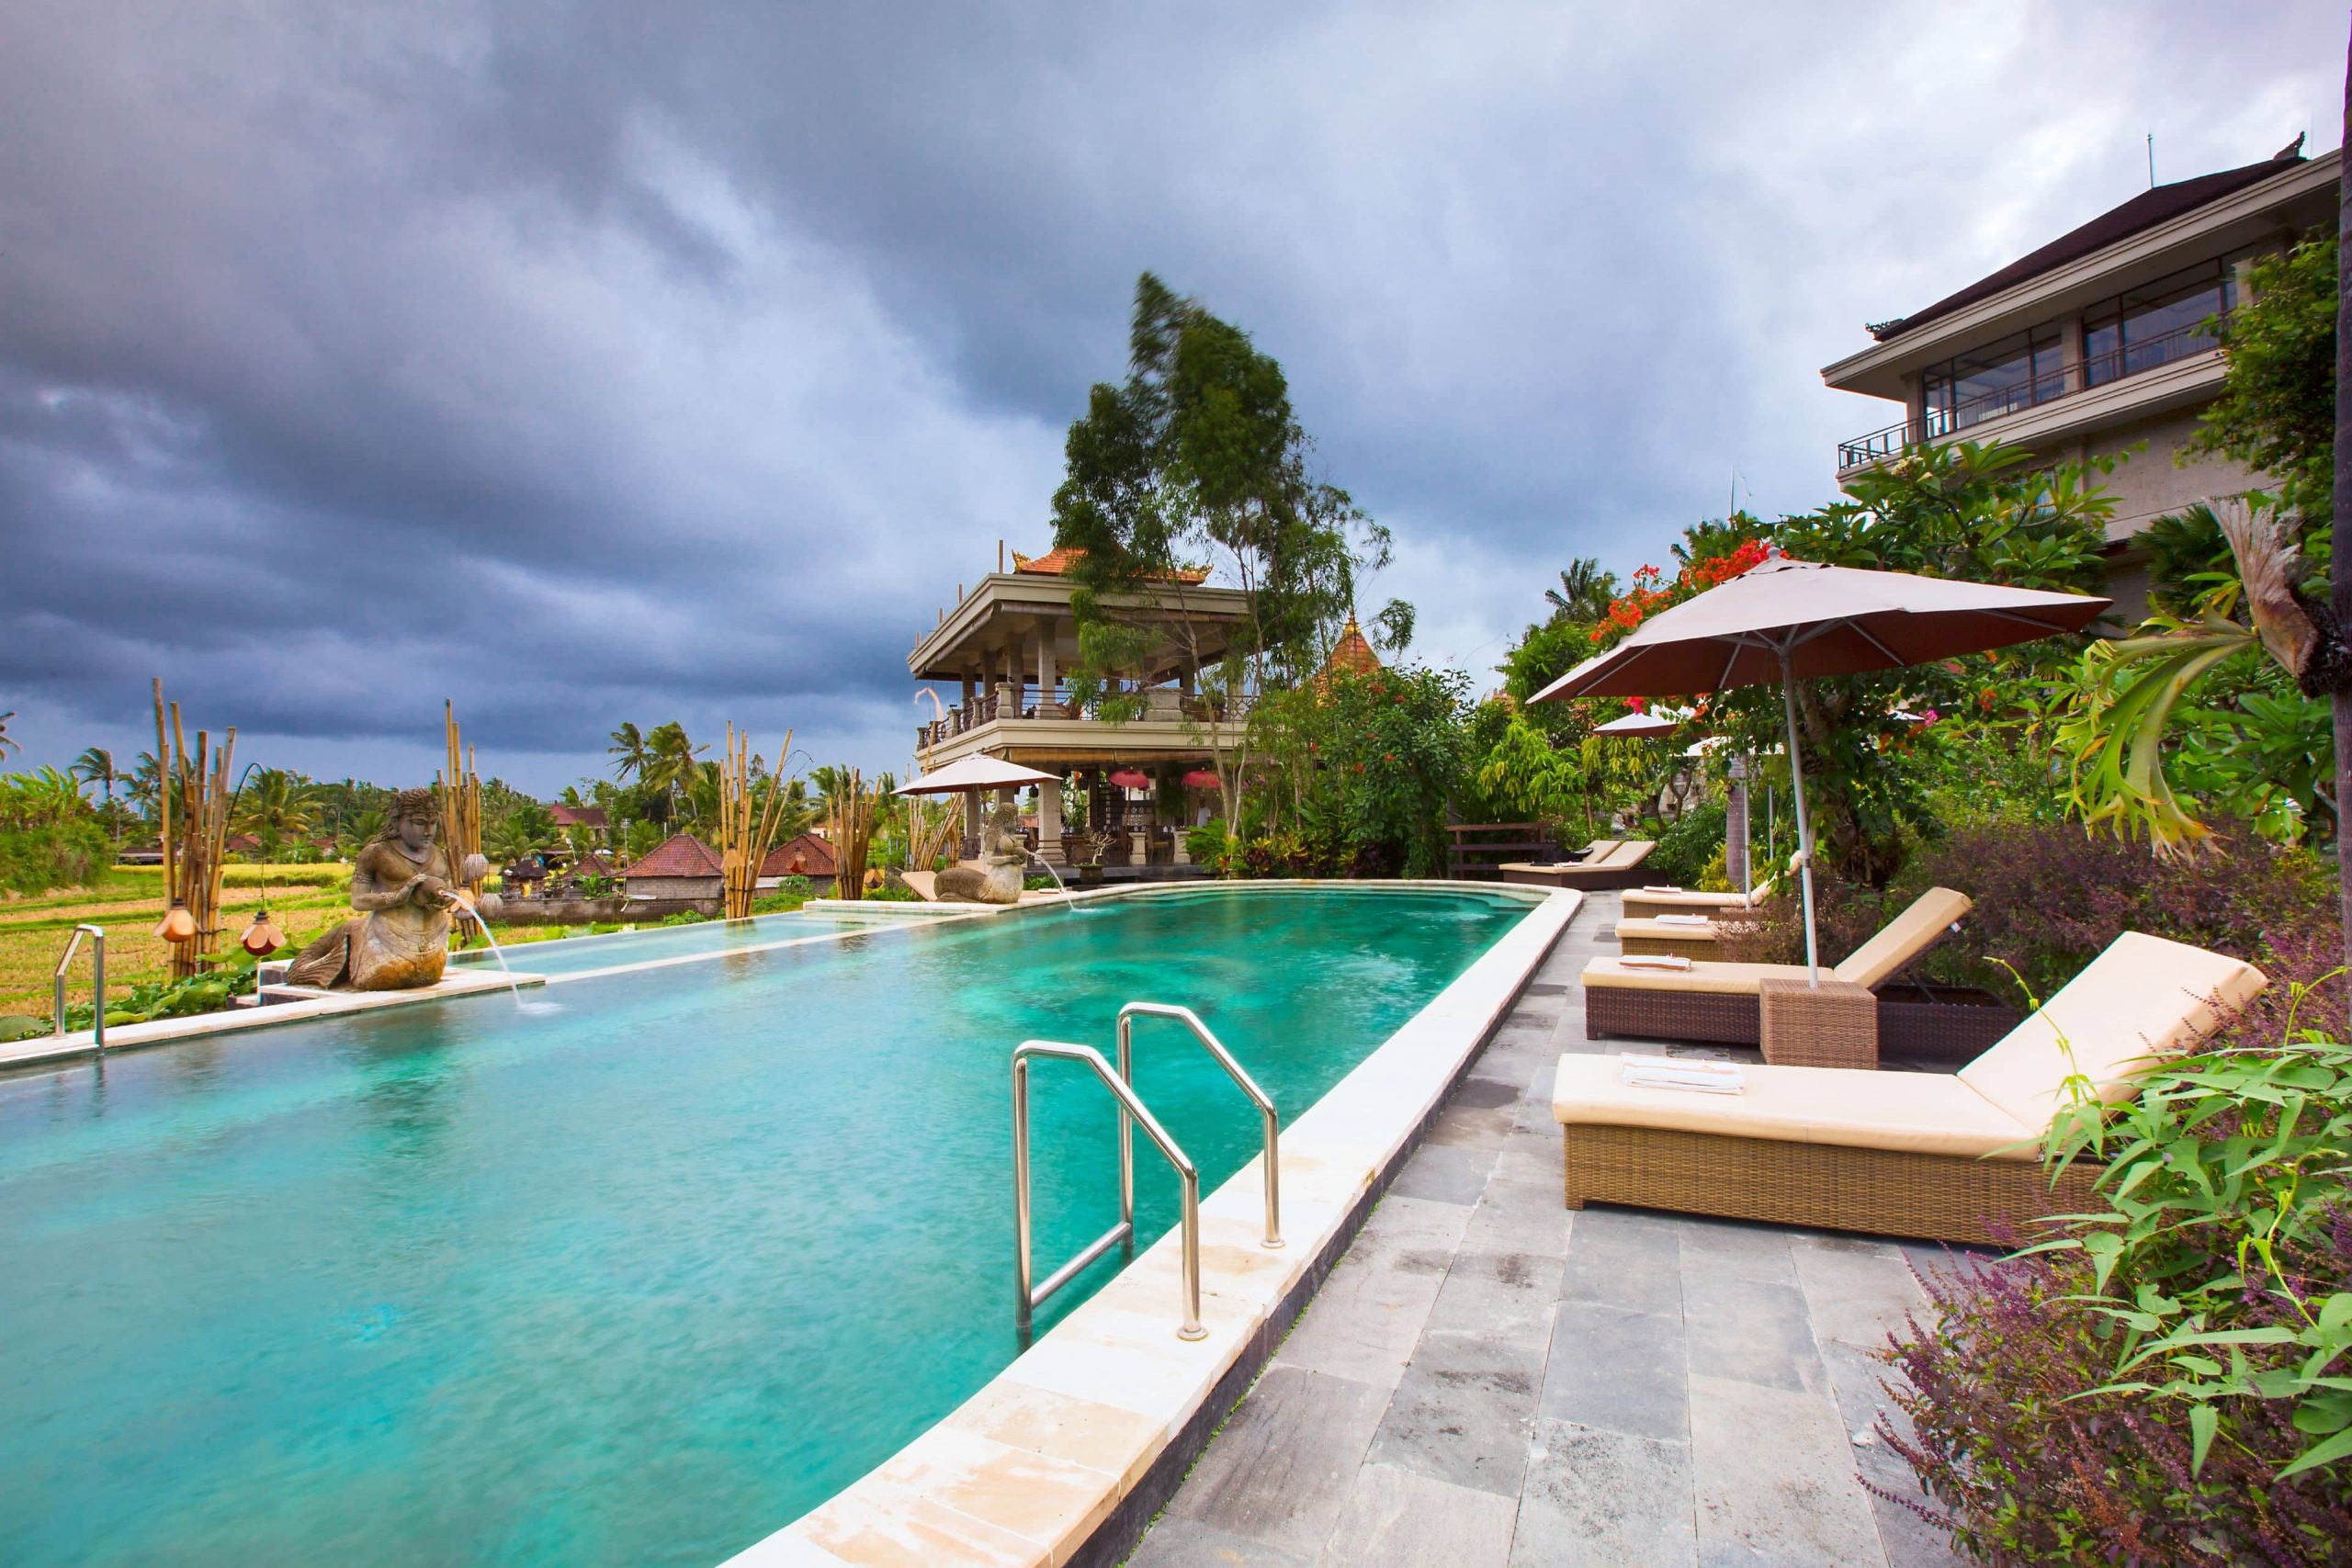 The beautiful outdoor pool area at the Om Ham Retreat & Resort in Bali.